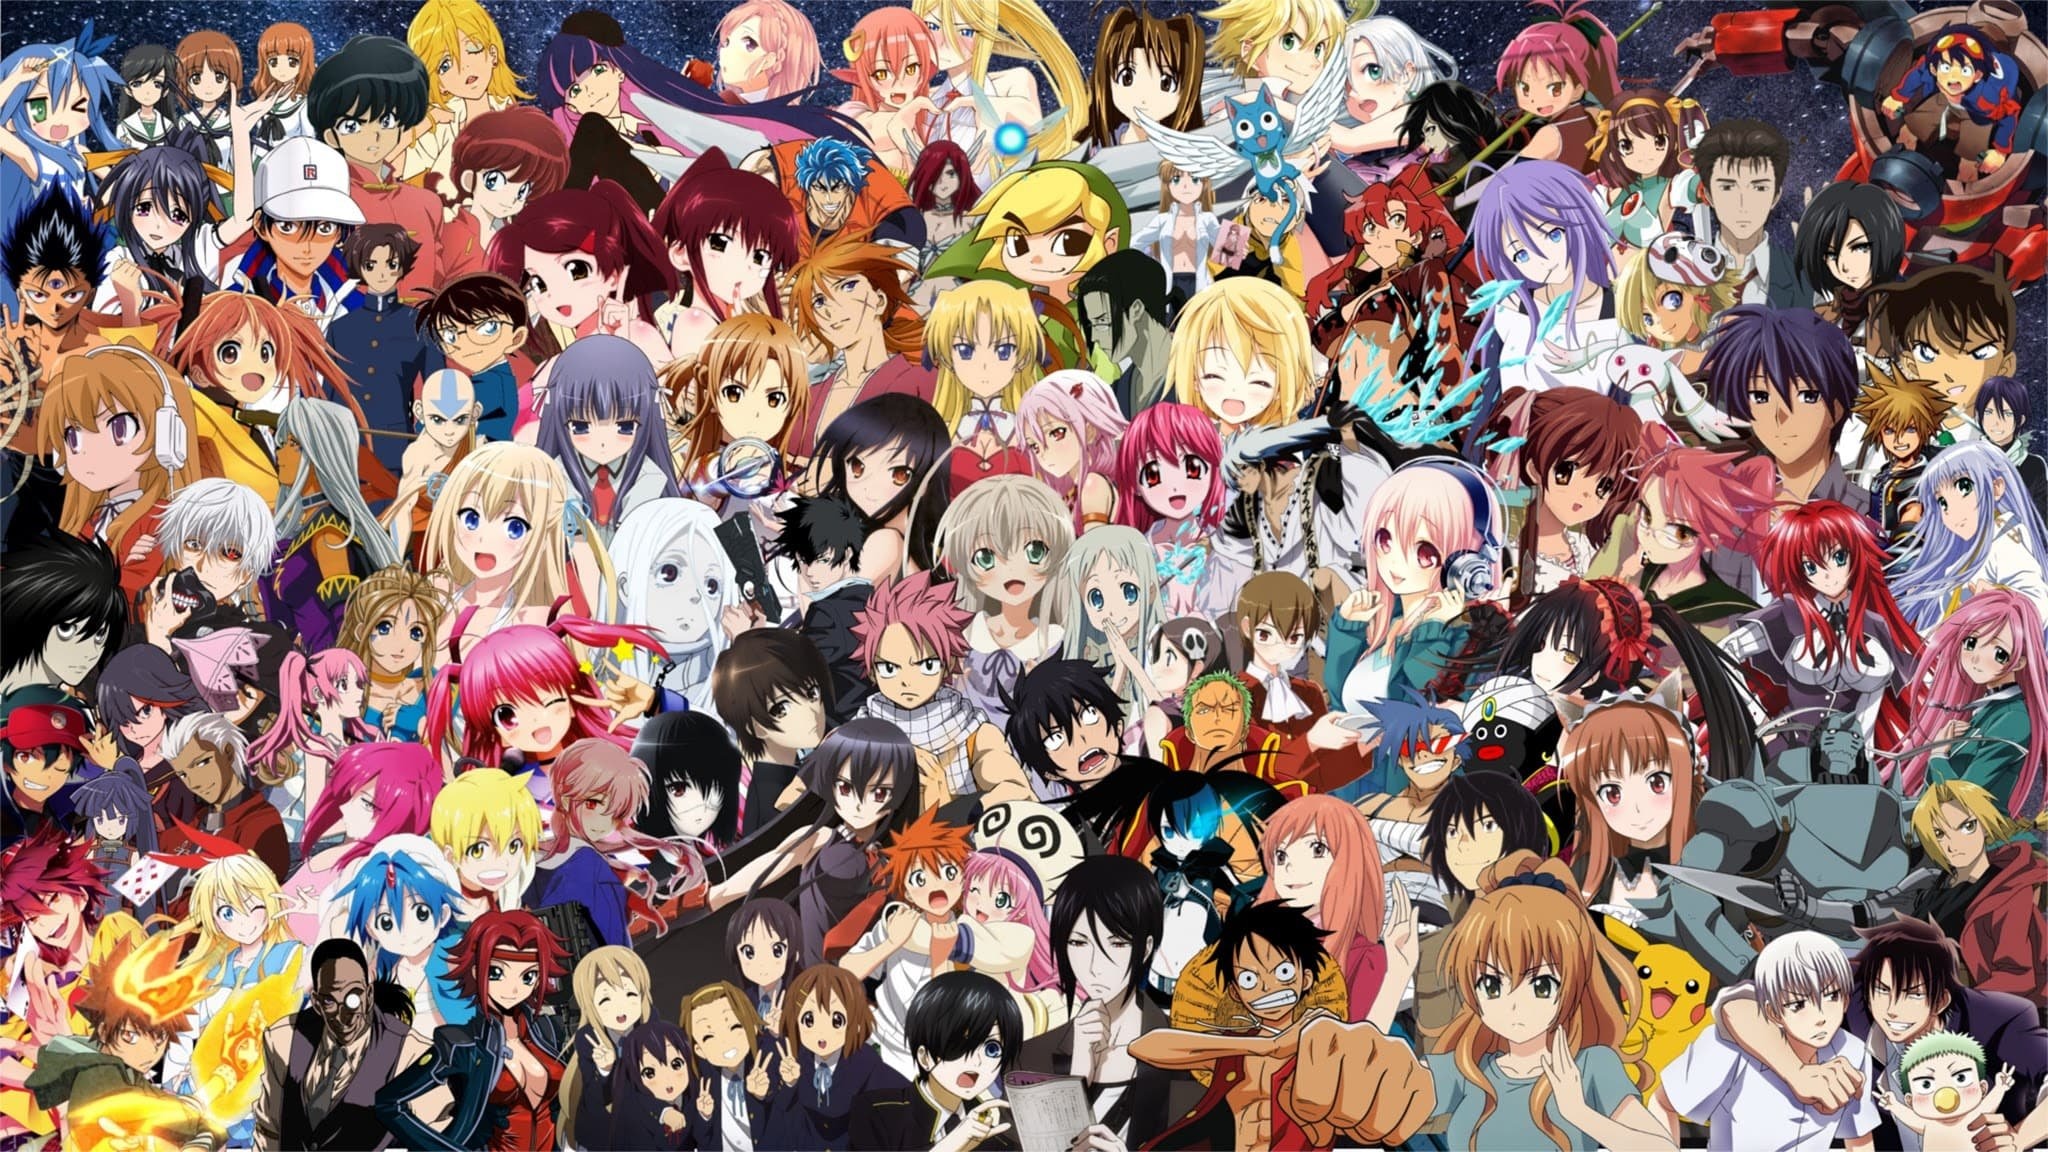 Comunidad Steam :: Wallpaper Engine  2048x1152 wallpapers, Anime scenery  wallpaper, Anime wallpaper 1920x1080